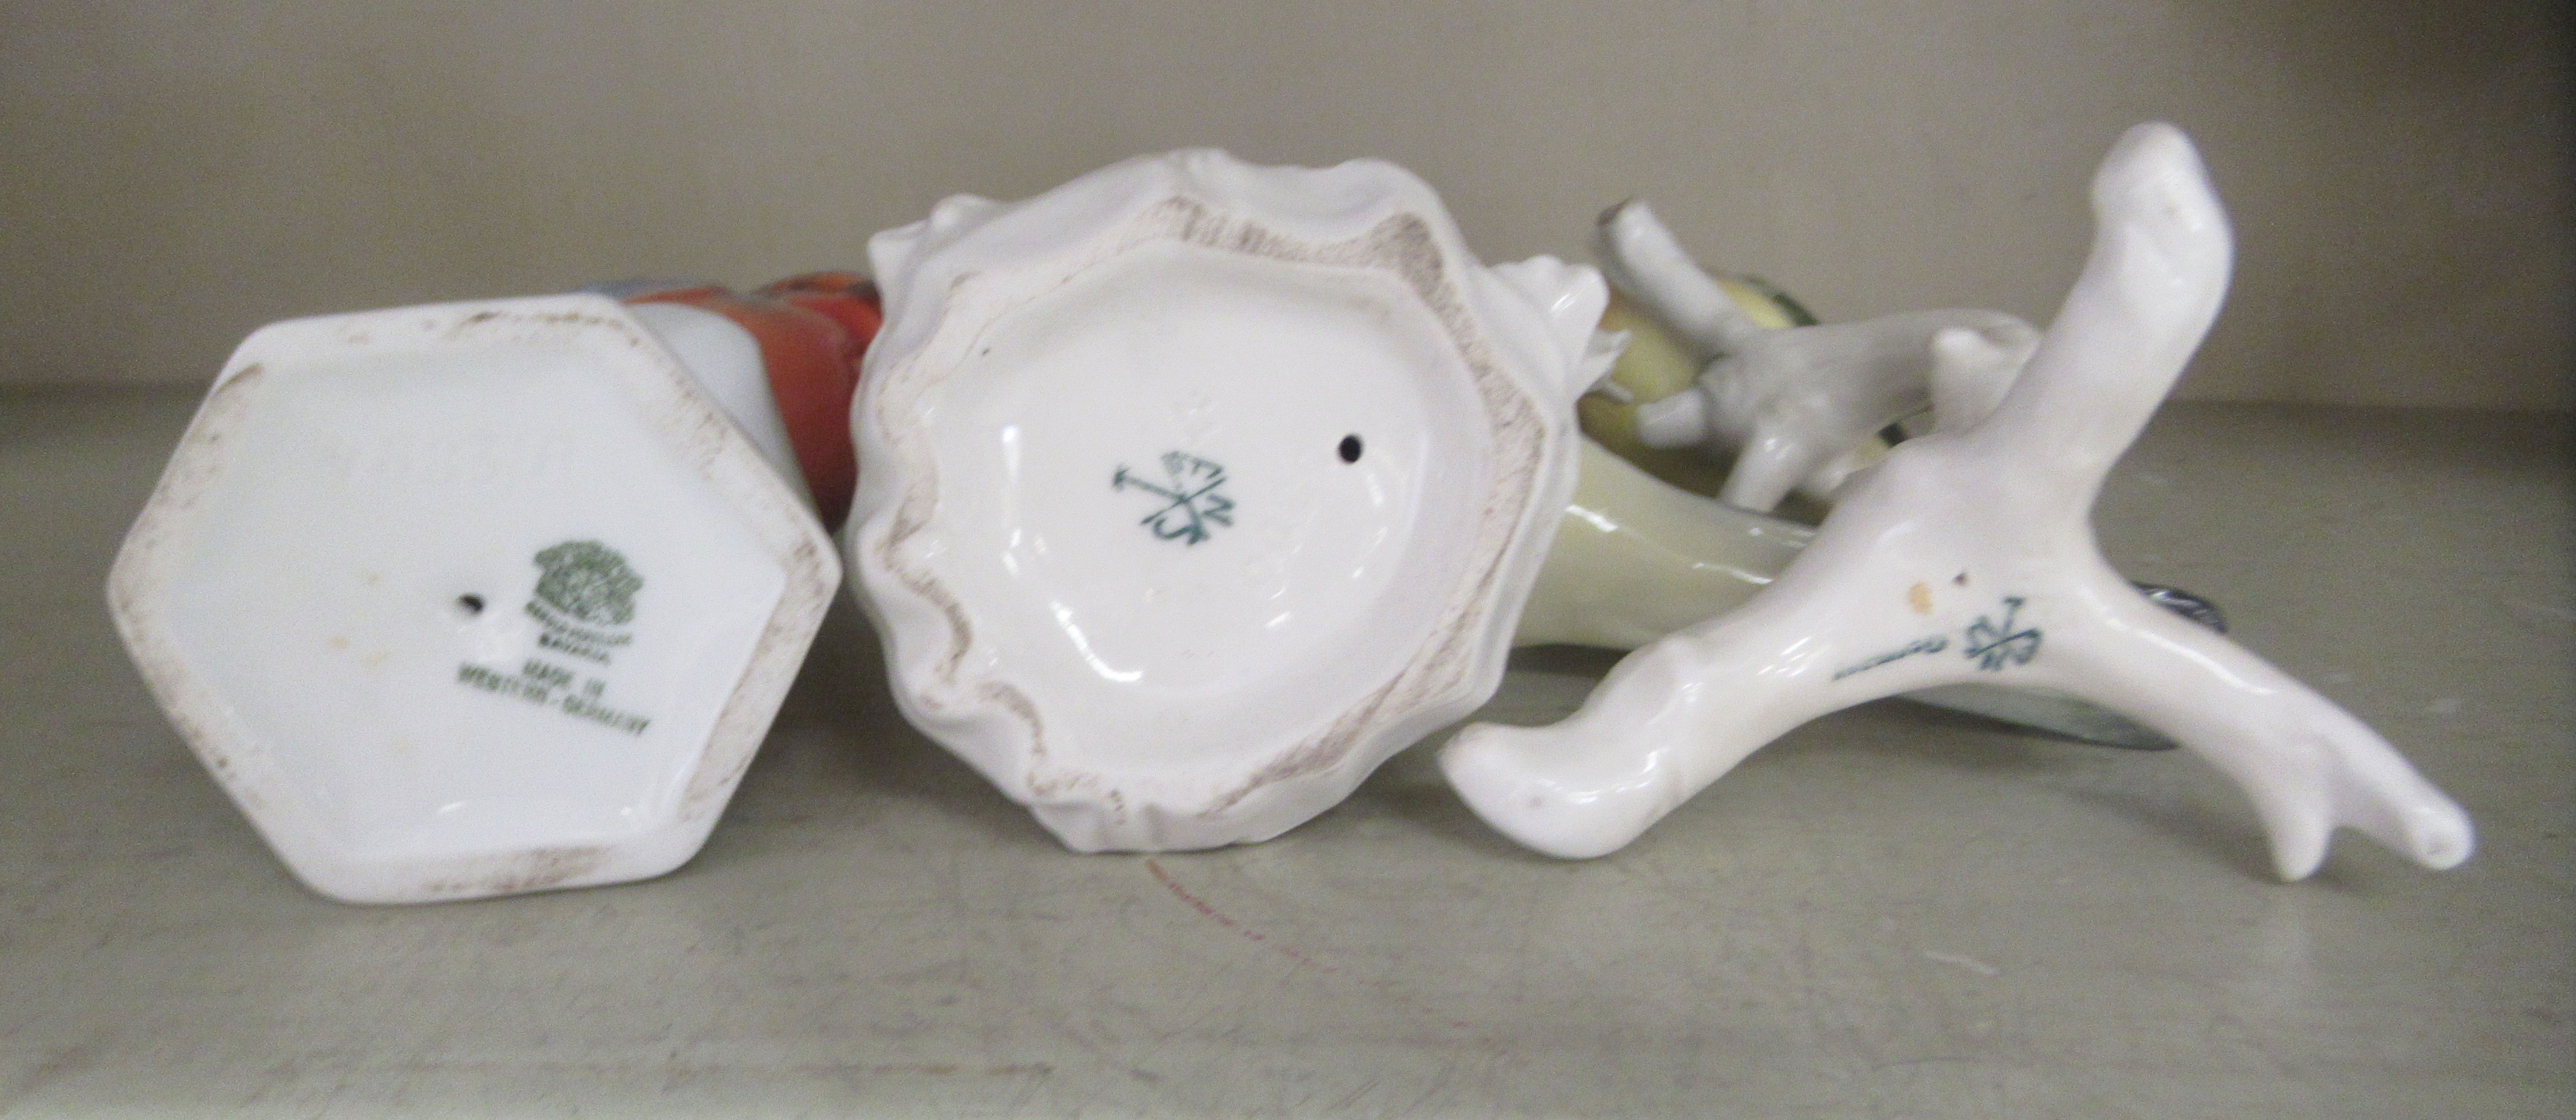 Decorative ceramics: to include a Kaiser porcelain figure, a hunter  10"h - Image 5 of 9